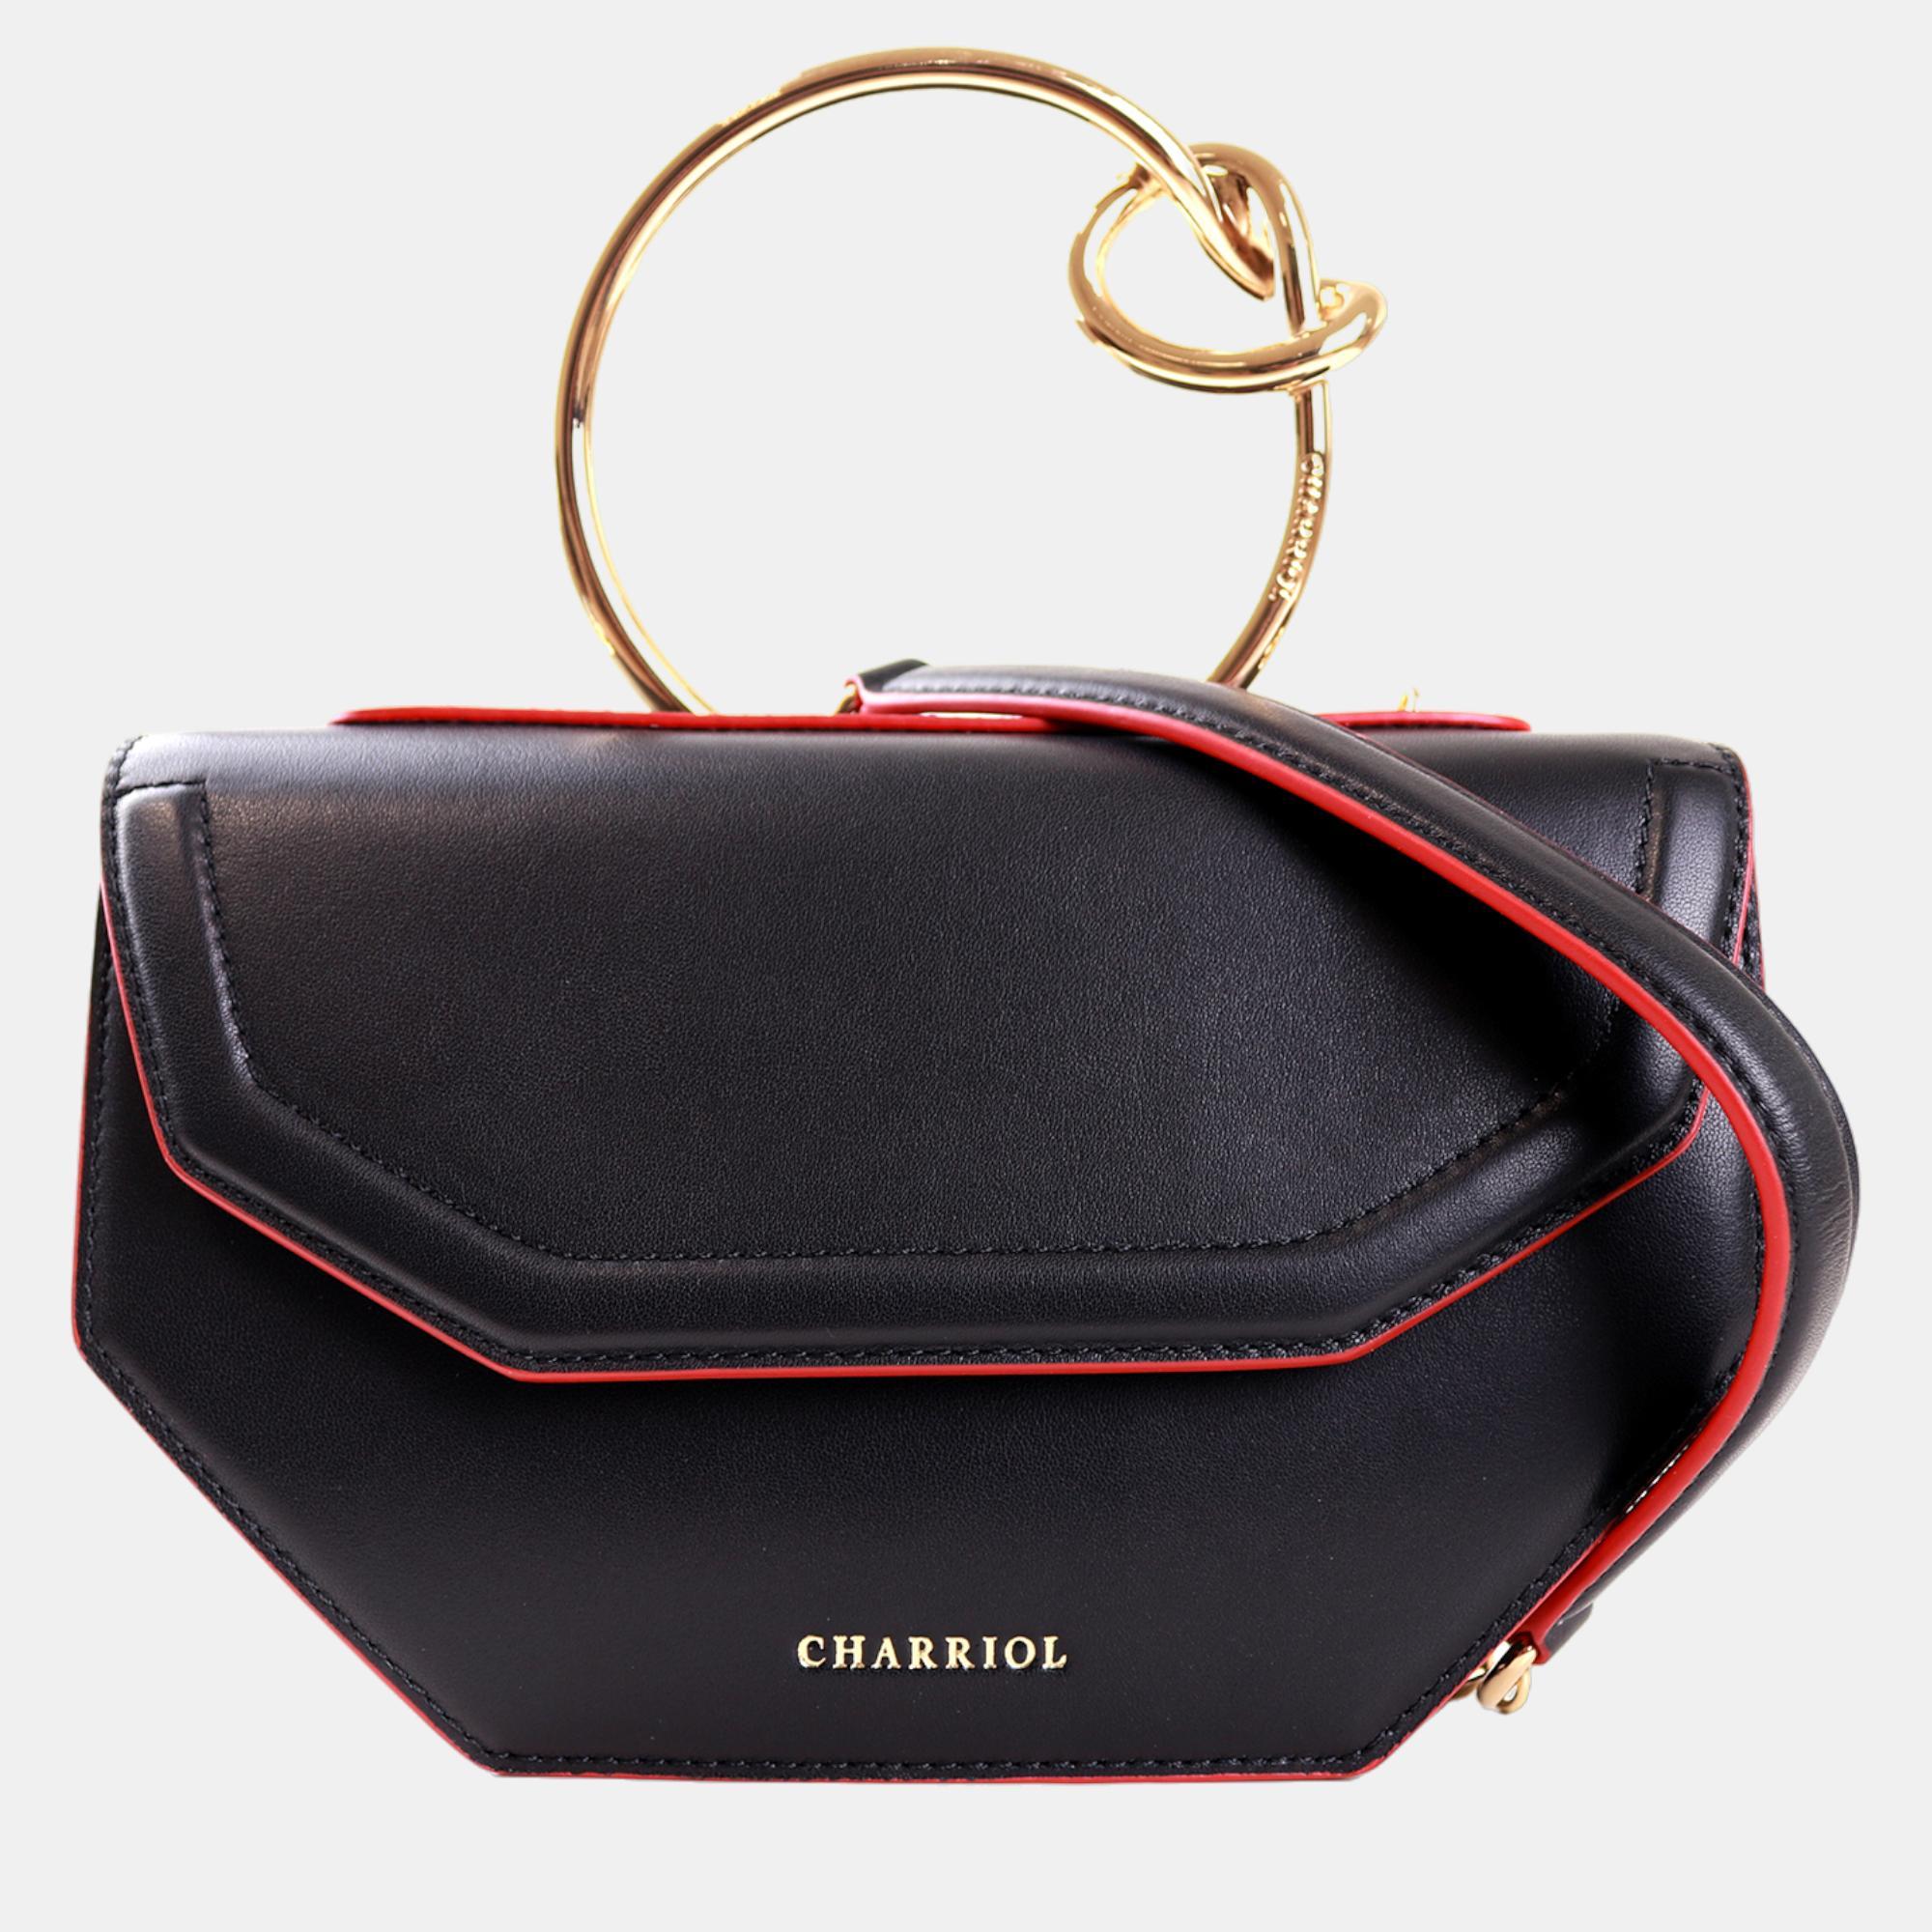 Charriol black leather zenitude handbag